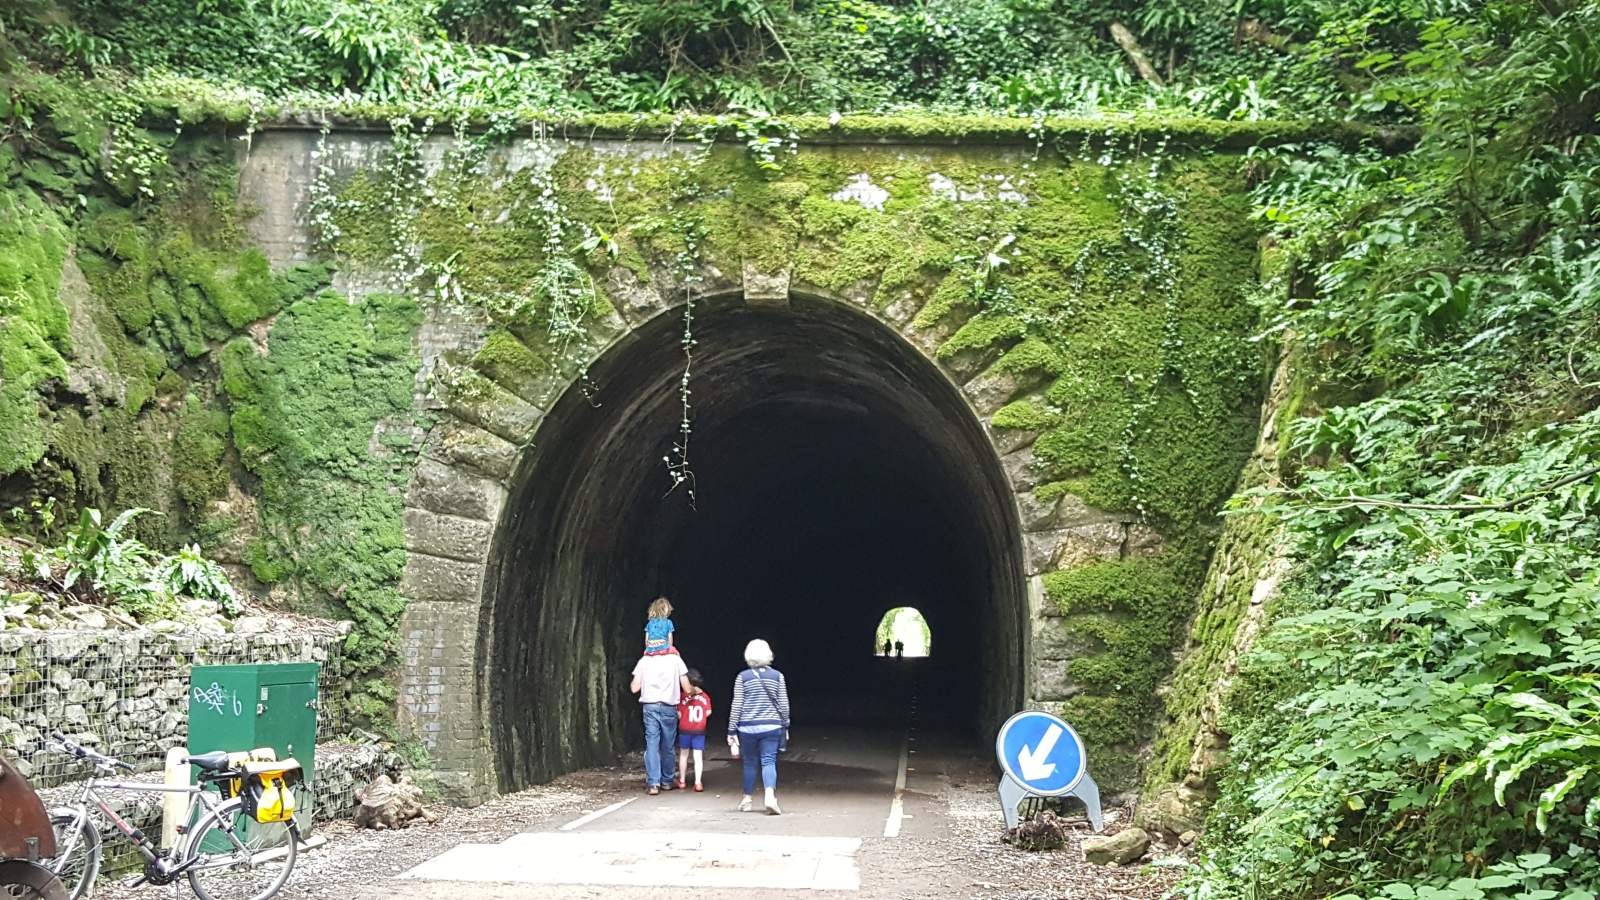 Shute Shelve Tunnel North Portal - Going in!